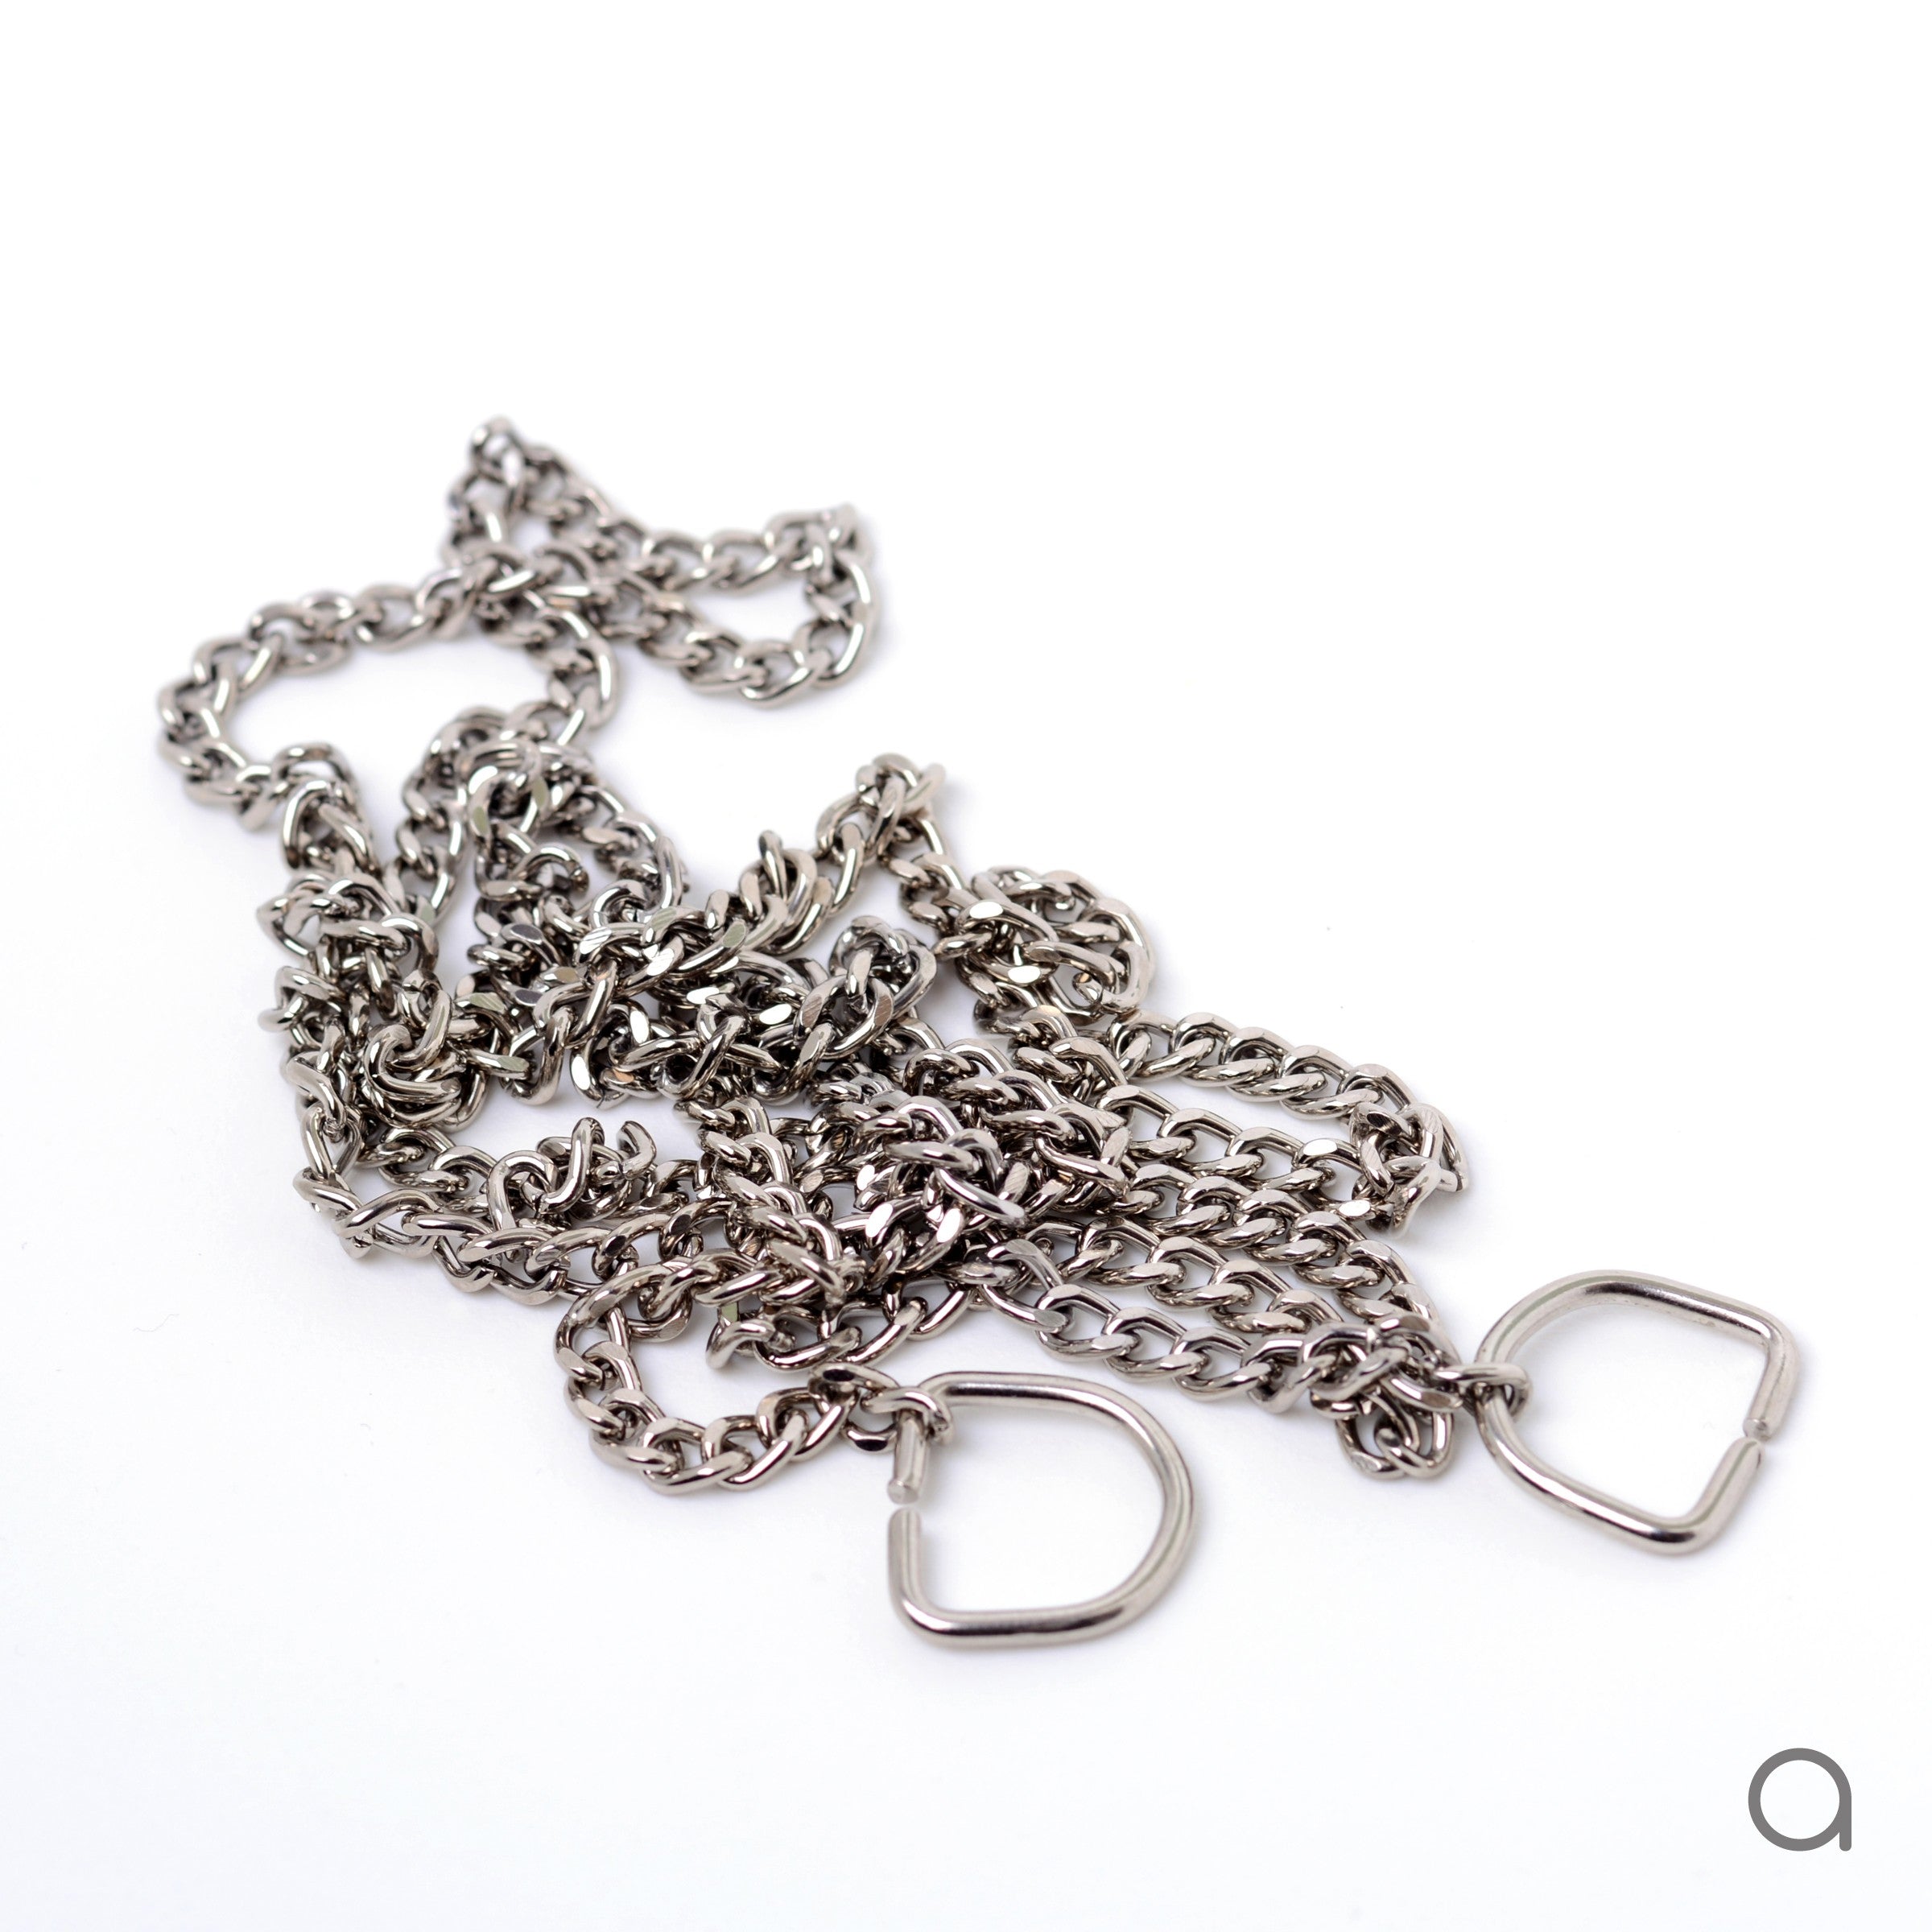 Removable silver color chain - 110 cm